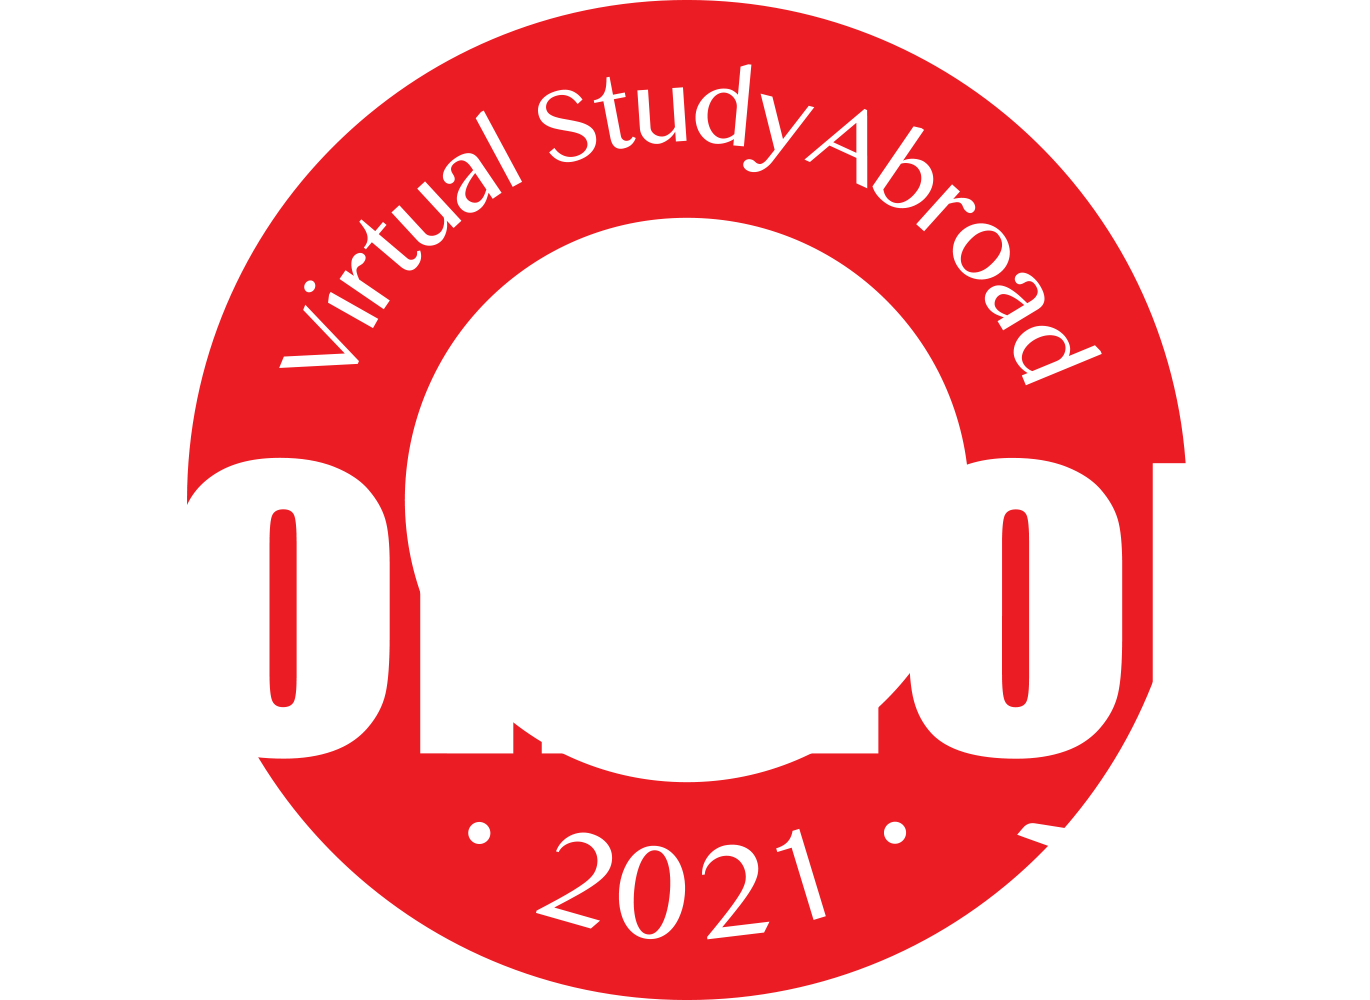 Virtual Study Abroad: London 2021